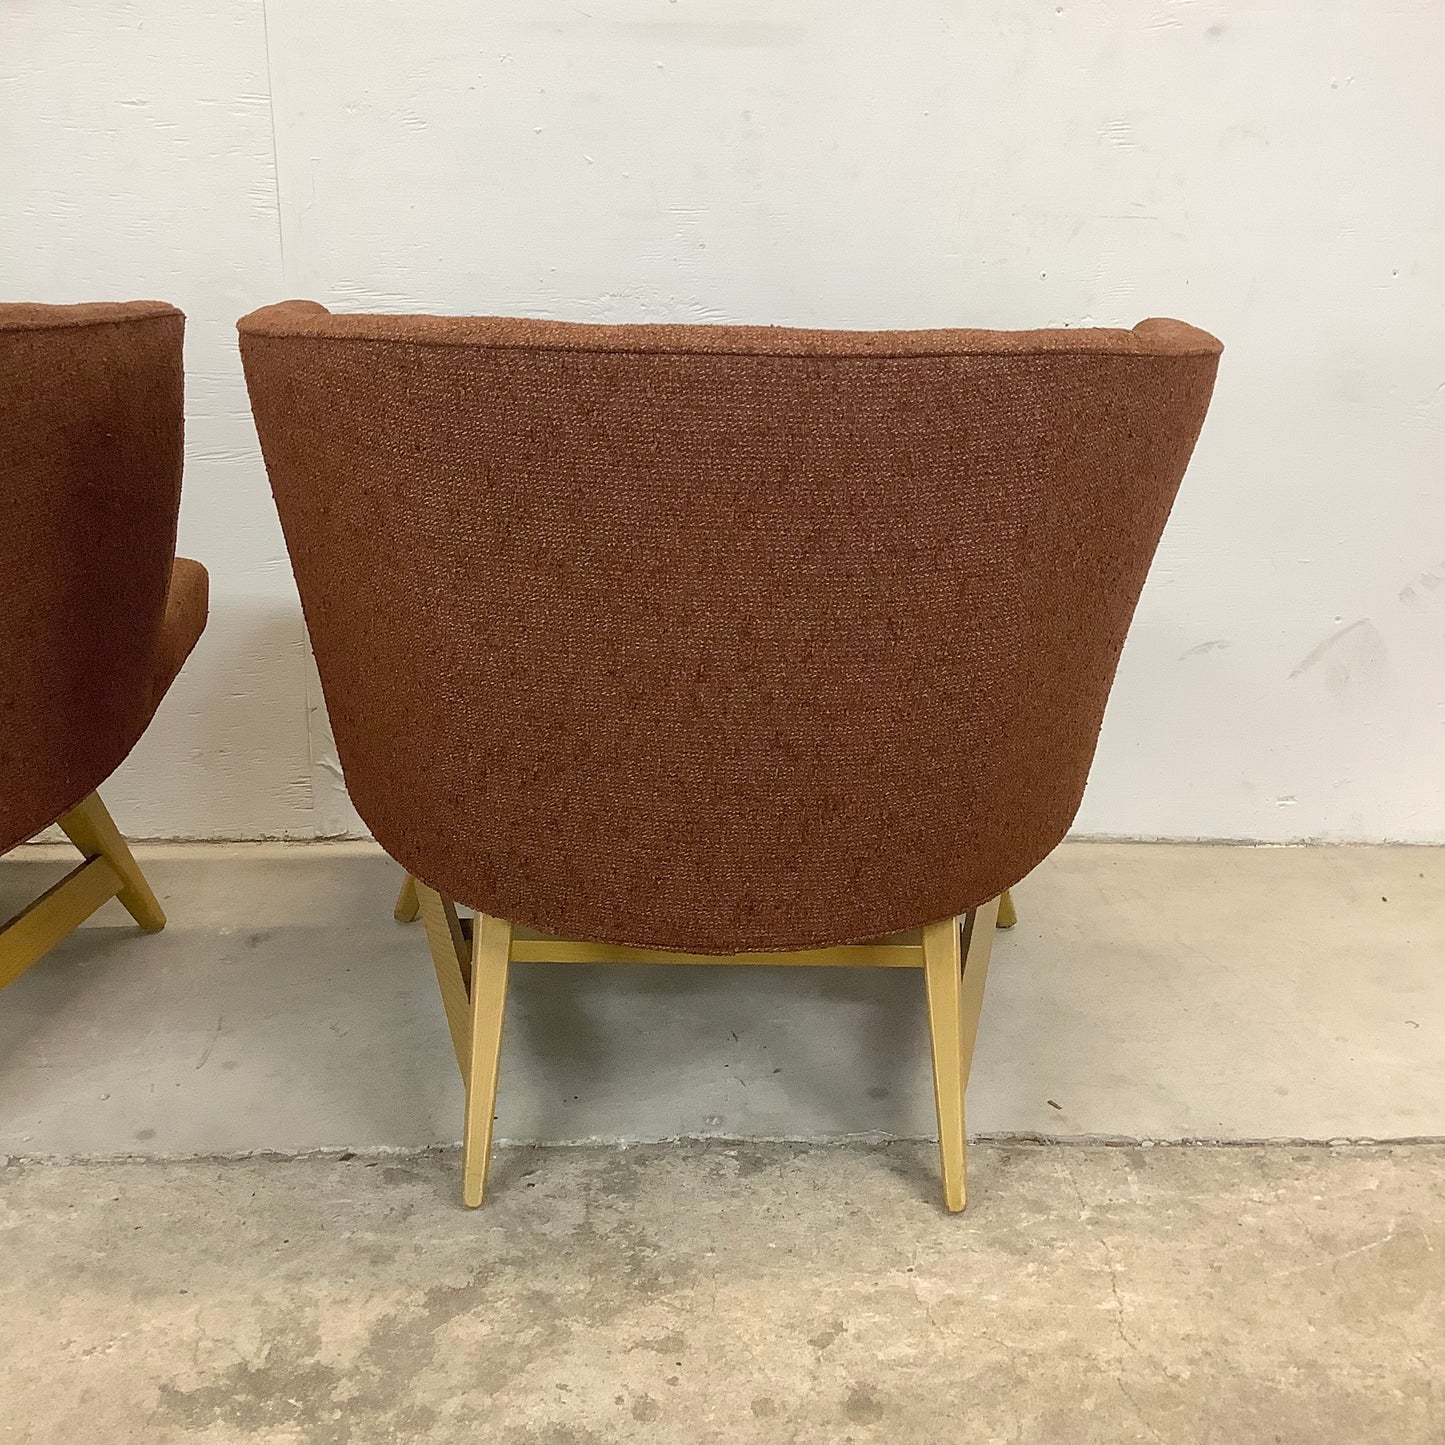 Pair Mid-Century Modern Lounge Chairs